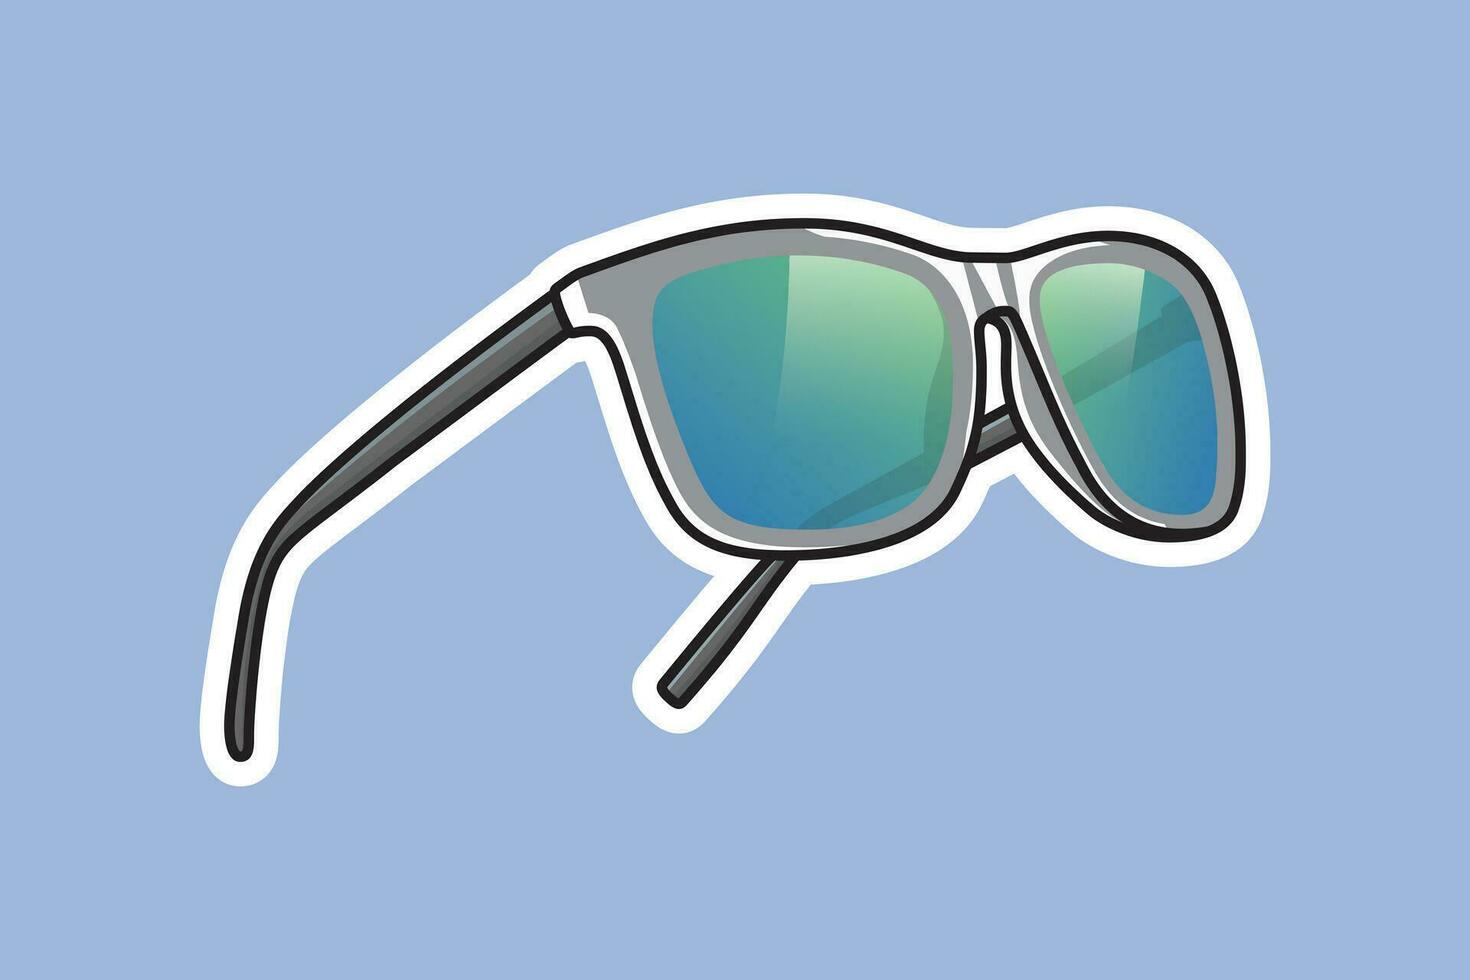 Sommer- Mode Sonne Brille Aufkleber Vektor Illustration. Sommer- und Mode Objekte Symbol Konzept. Sommer- glänzend bunt Sonnenbrille Aufkleber Design Vektor mit Schatten.